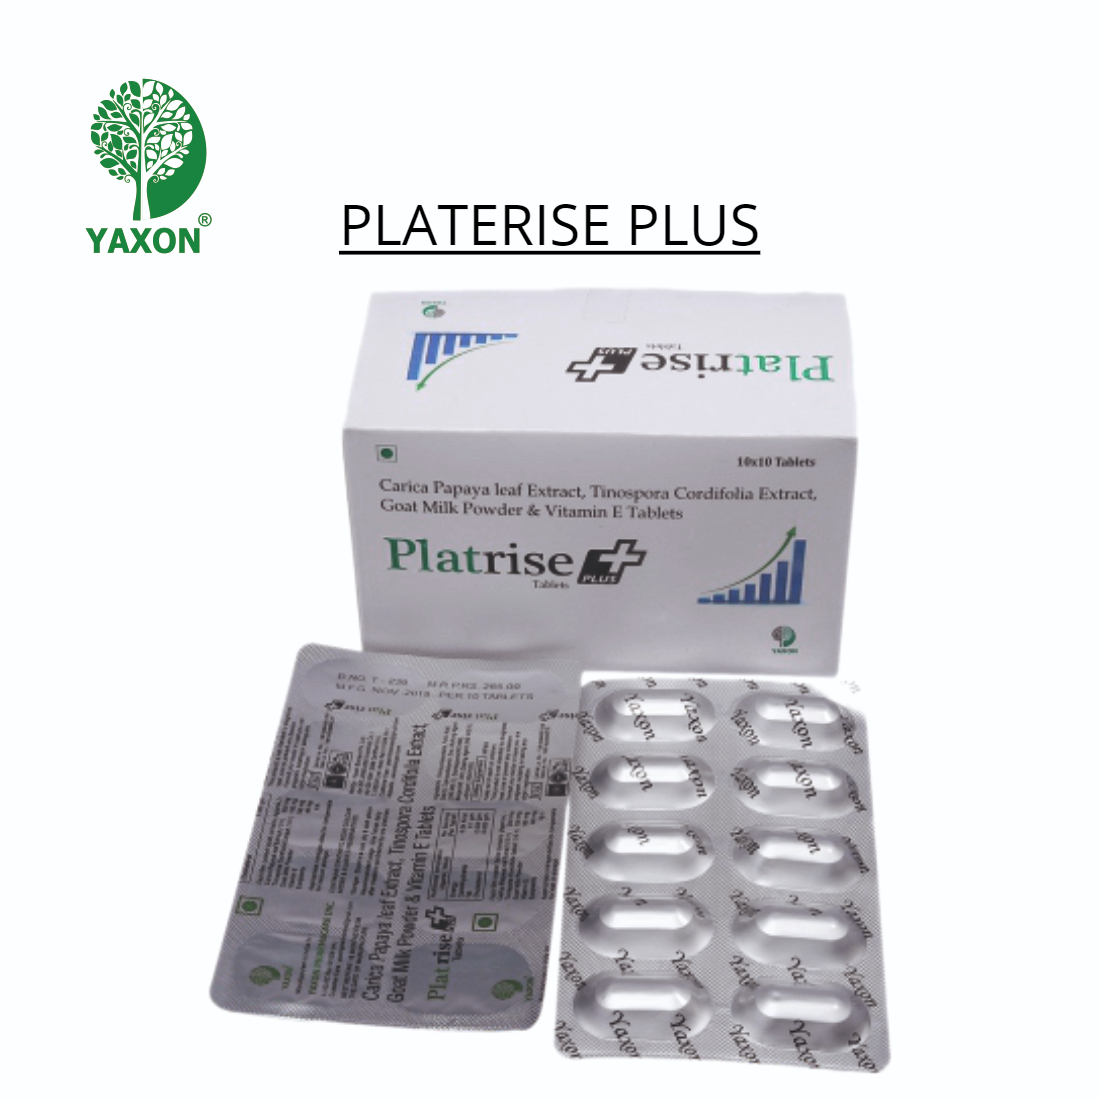 YAXON PLATRISE PLUS Immunity Tablets